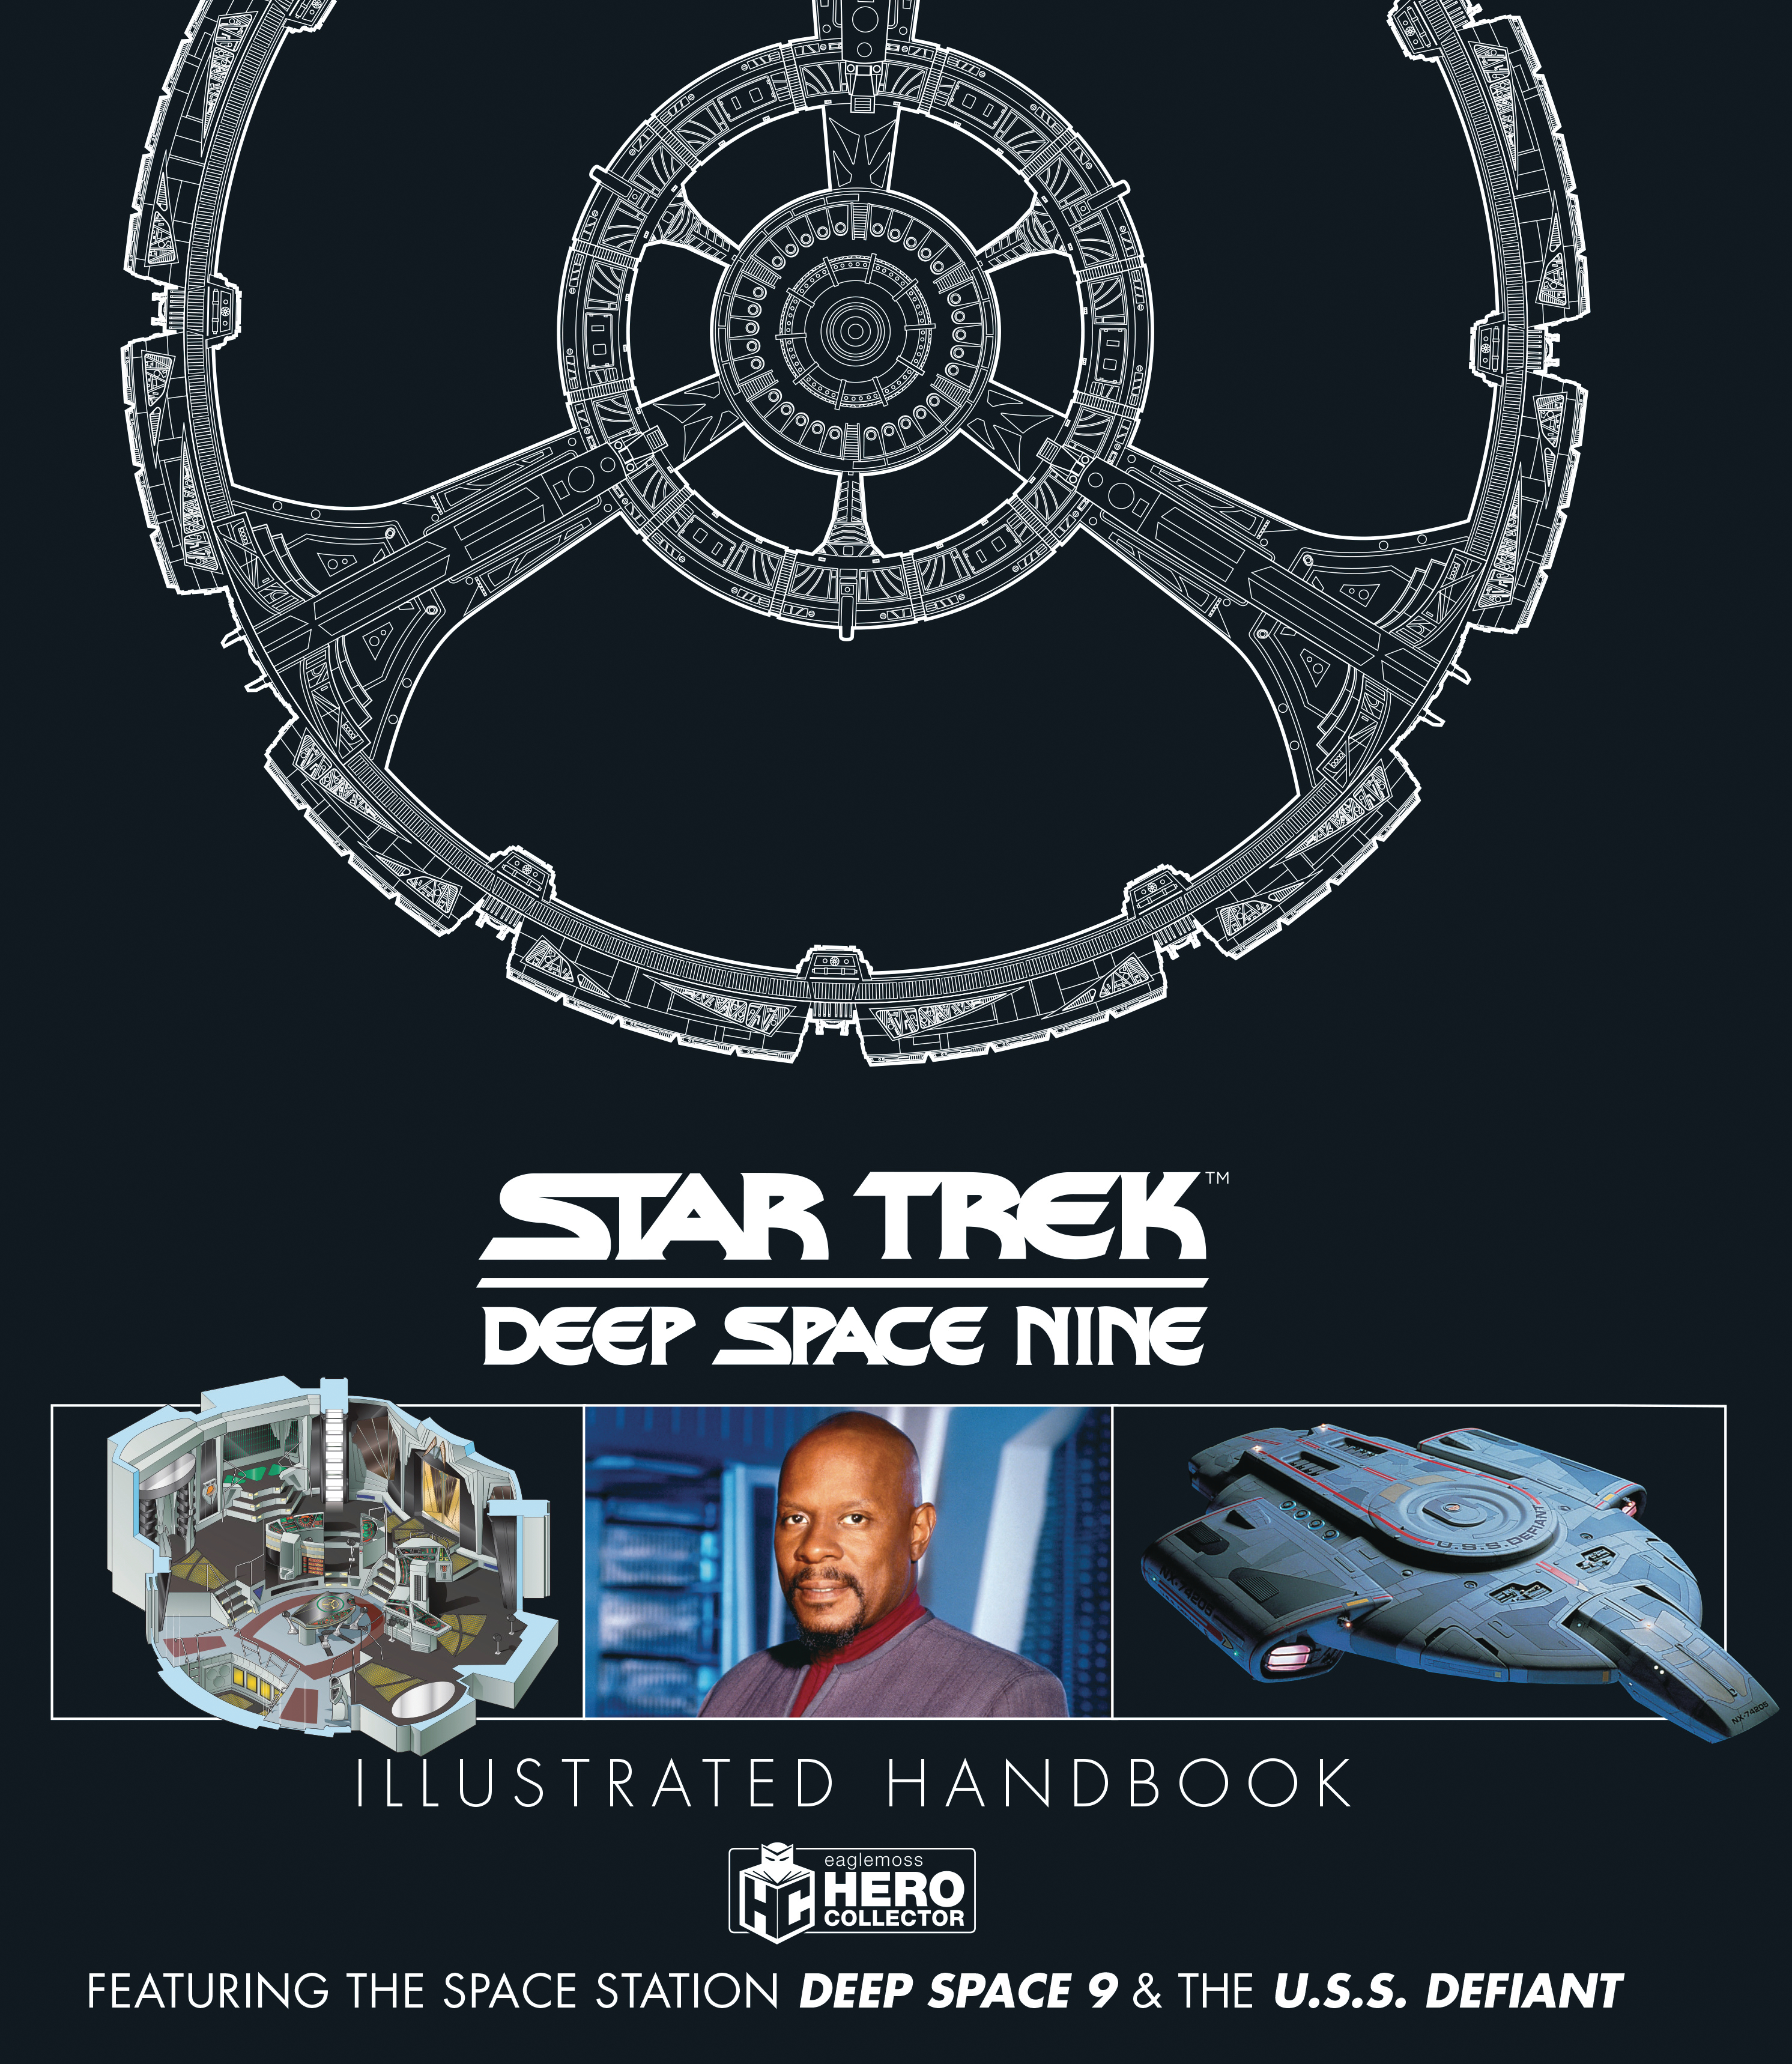 Star Trek Deep Space Nine & Uss Defiant Illustrated Handbook Hardcover